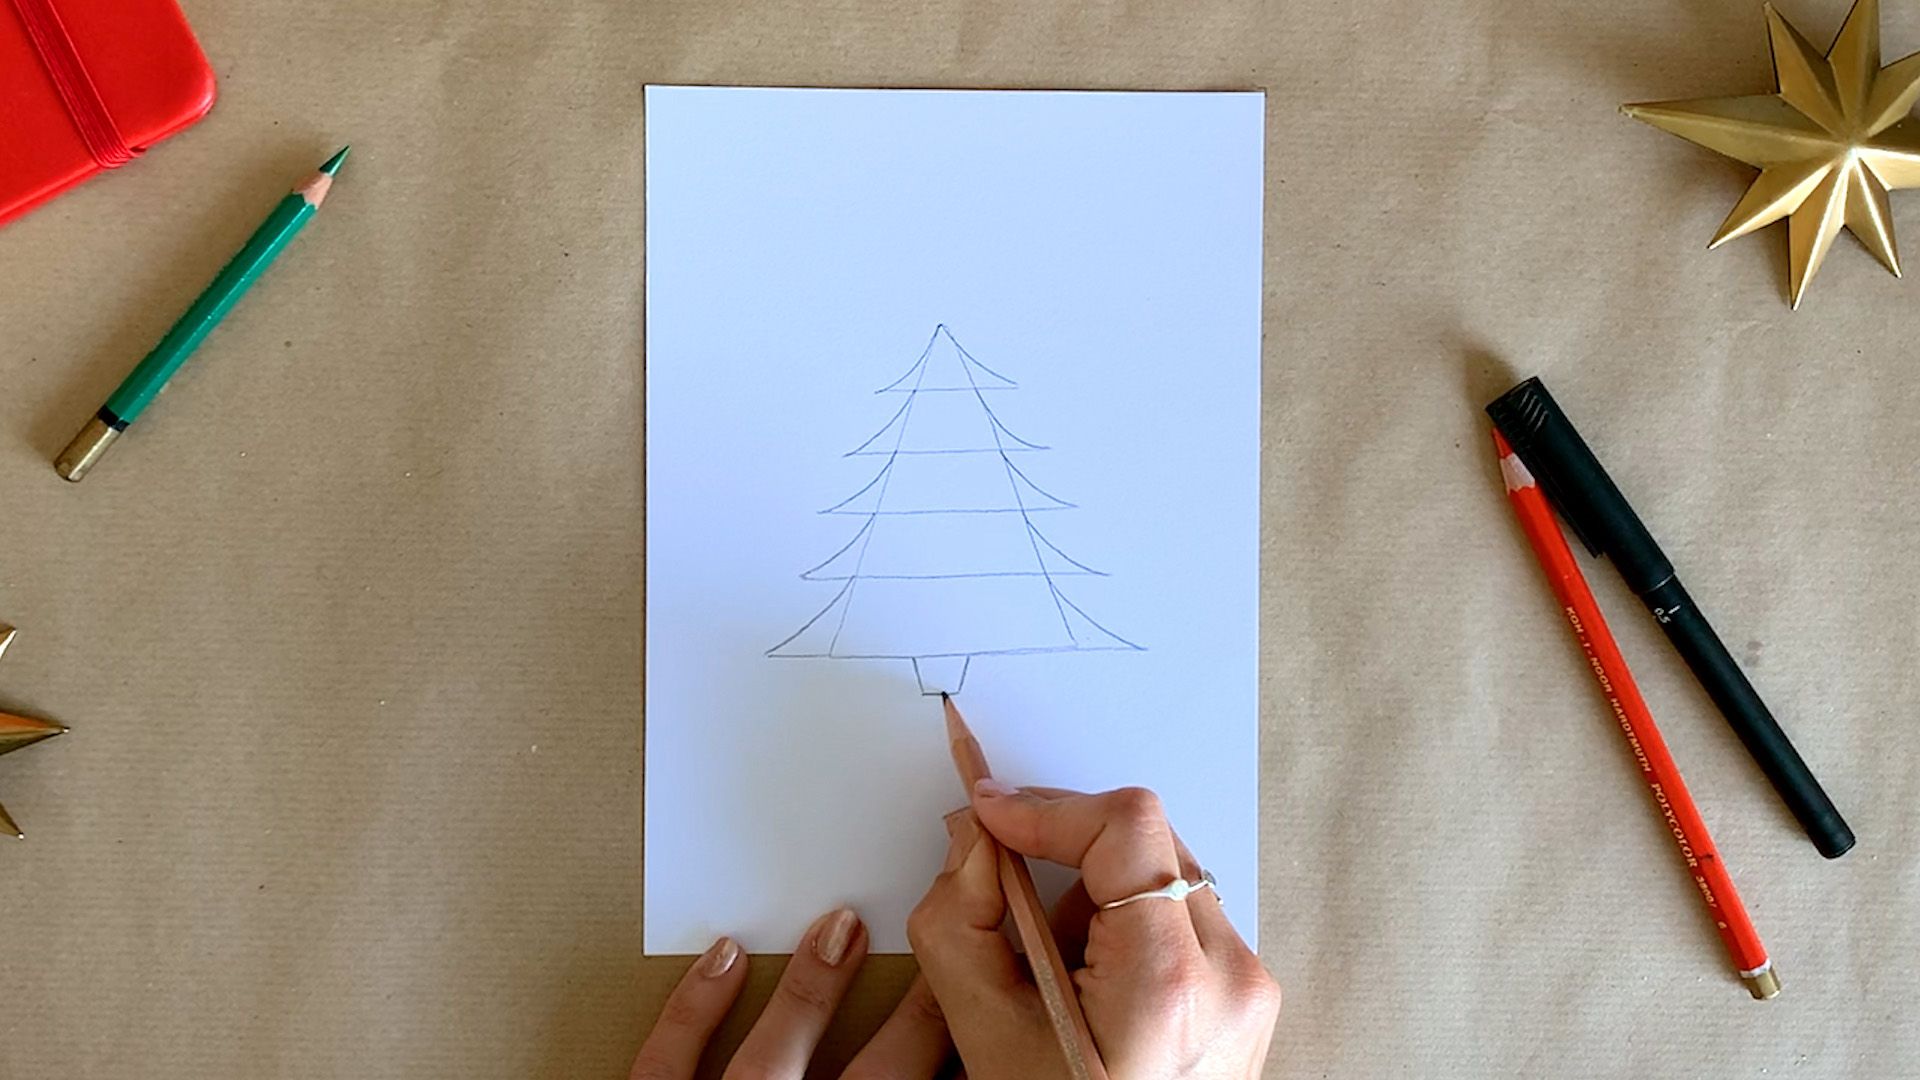 A Christmas tree with a twist – Get creative